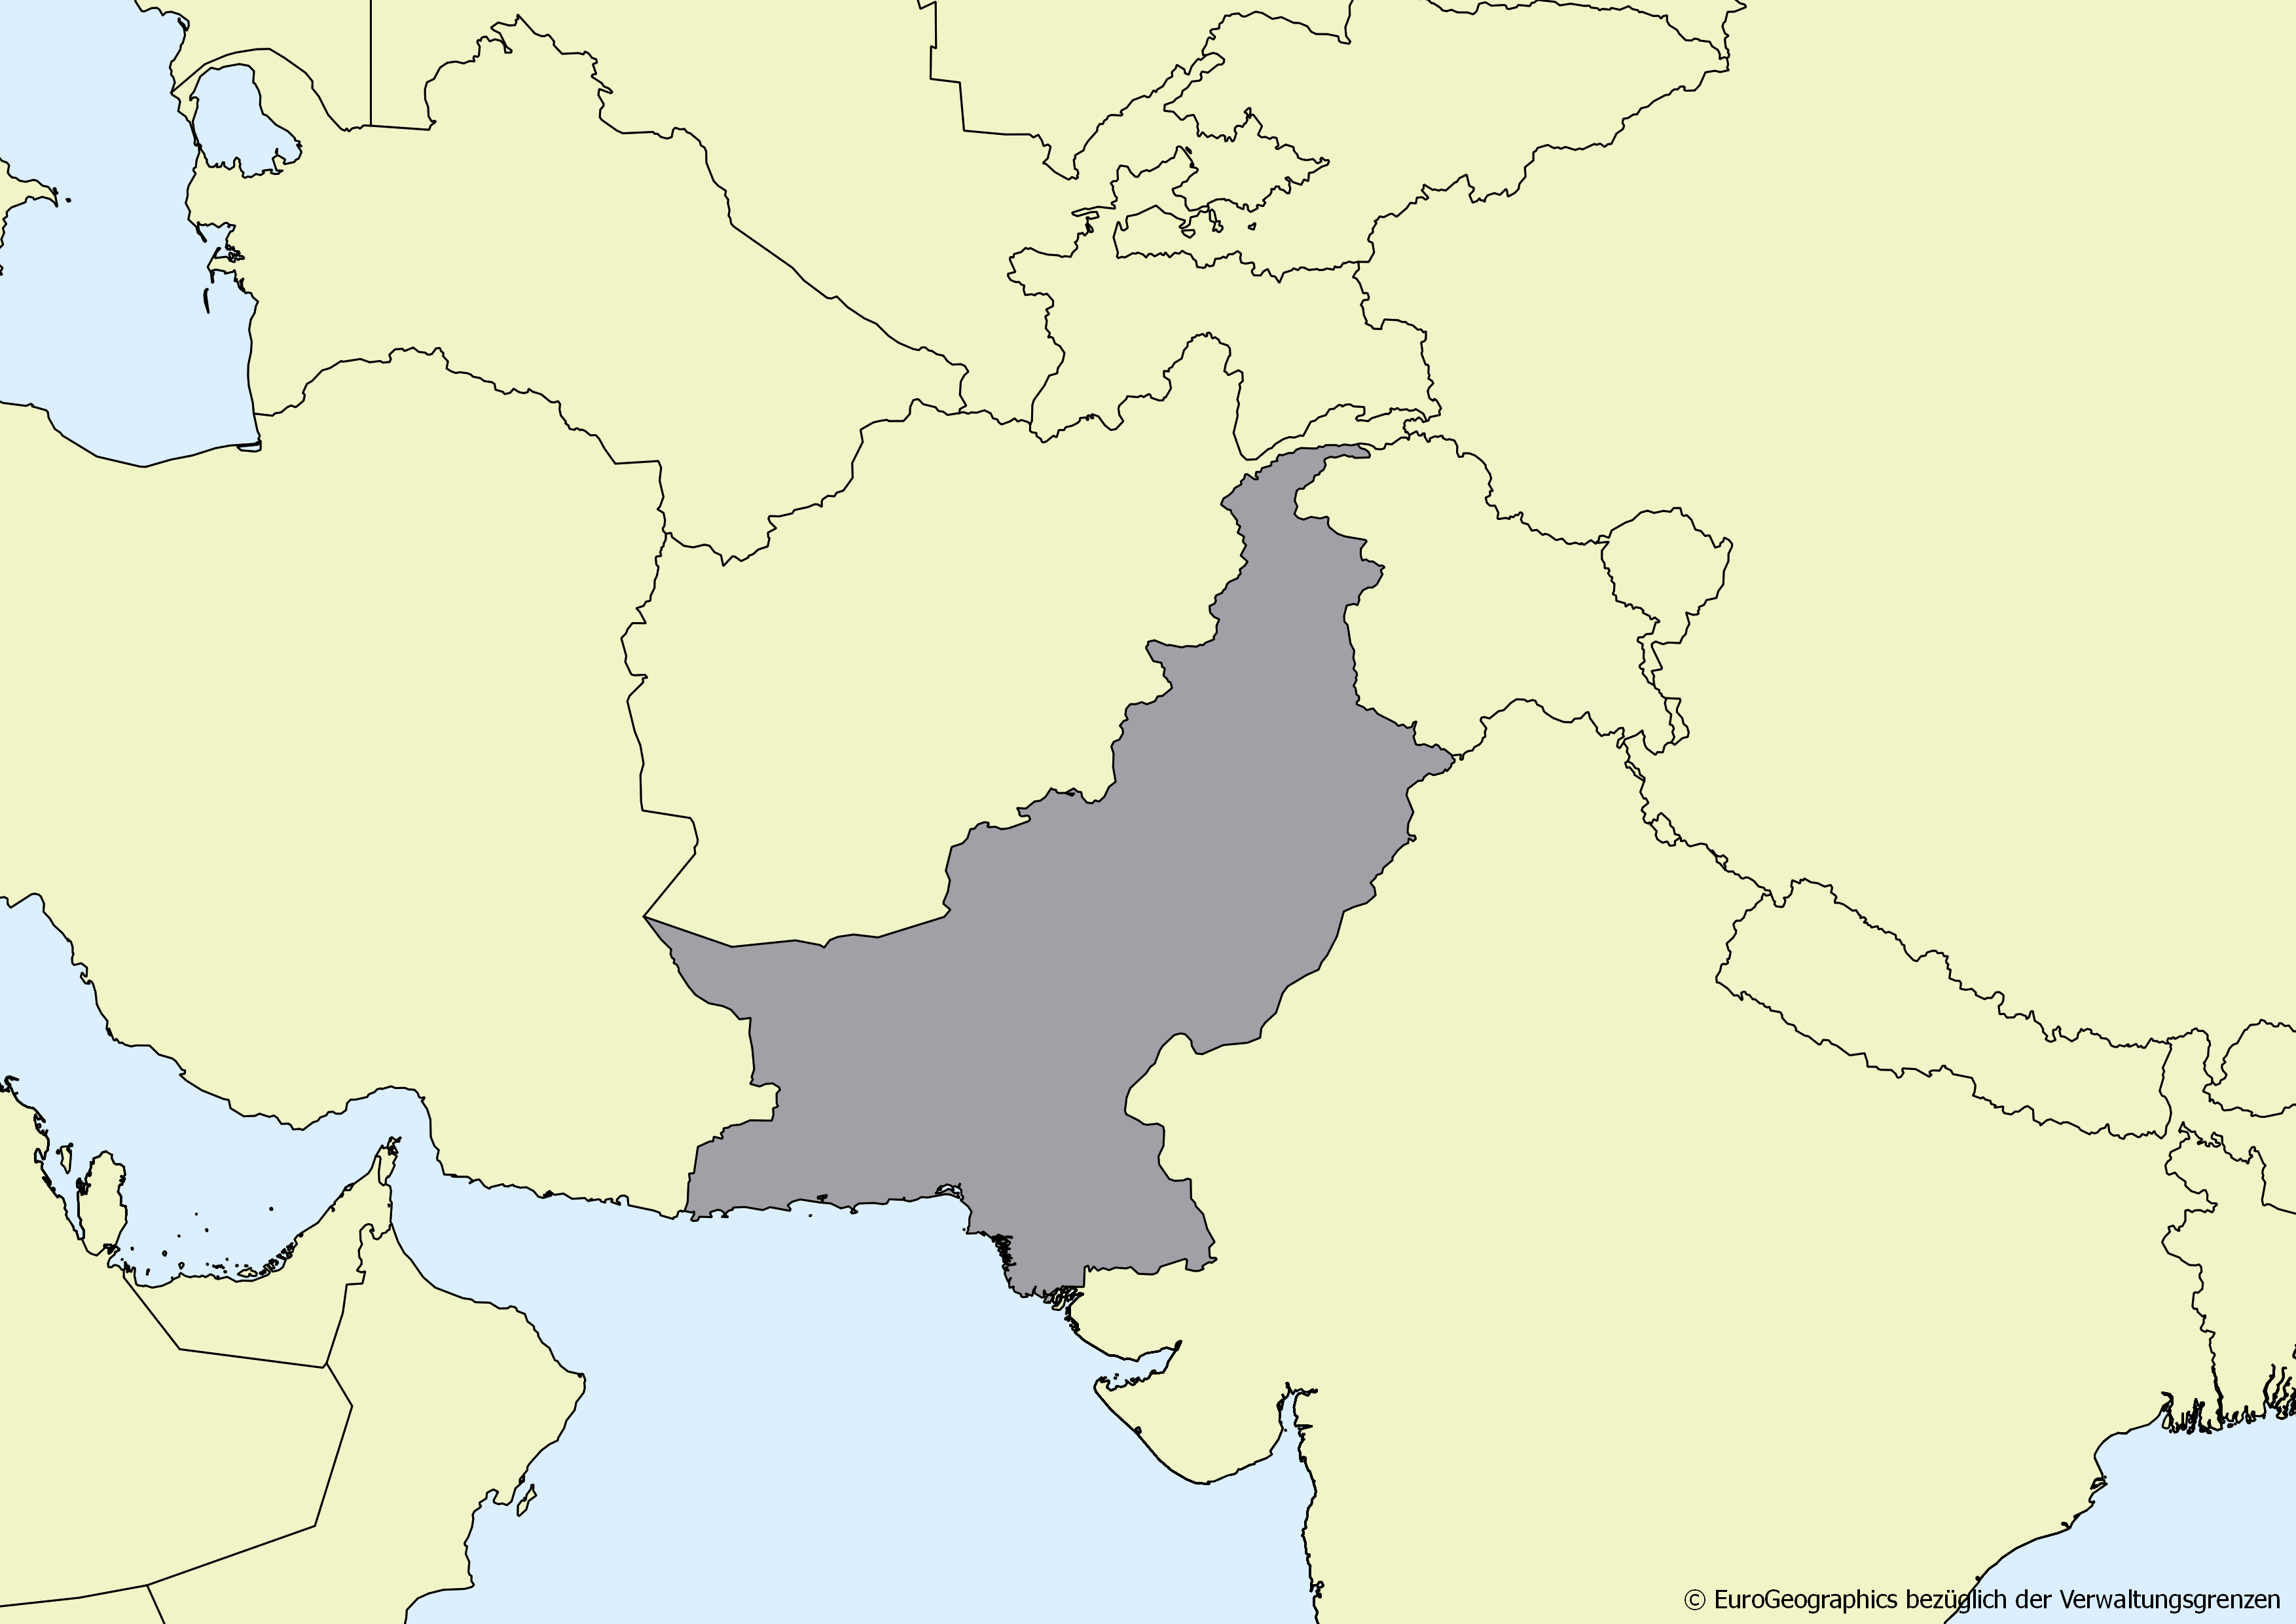 Landkarte Pakistan